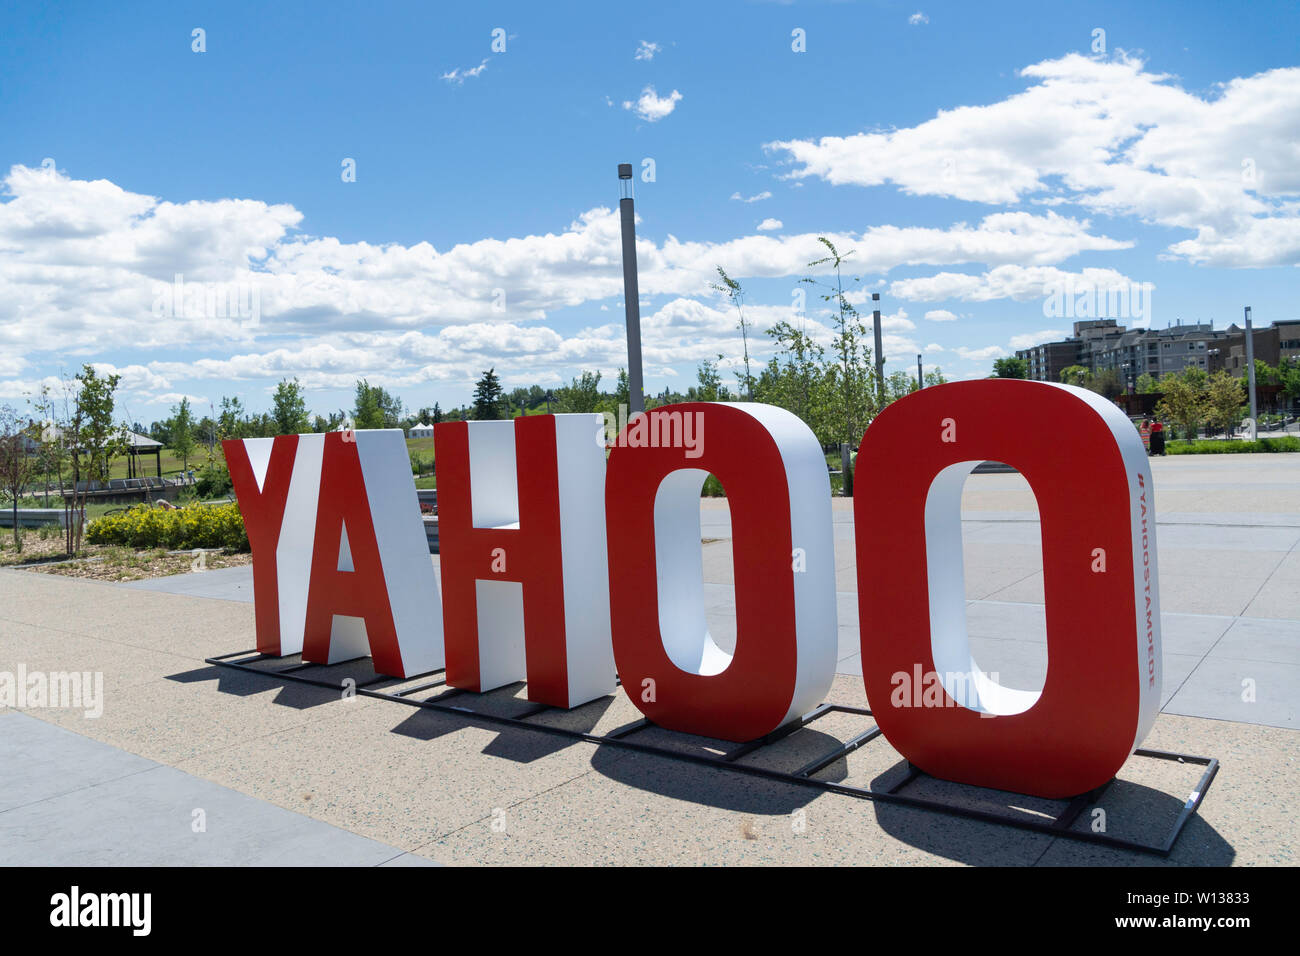 June 29 2019 - Calgary, Alberta, Canada - Calgary Stampede Signs and displays around the city of Calgary Stock Photo